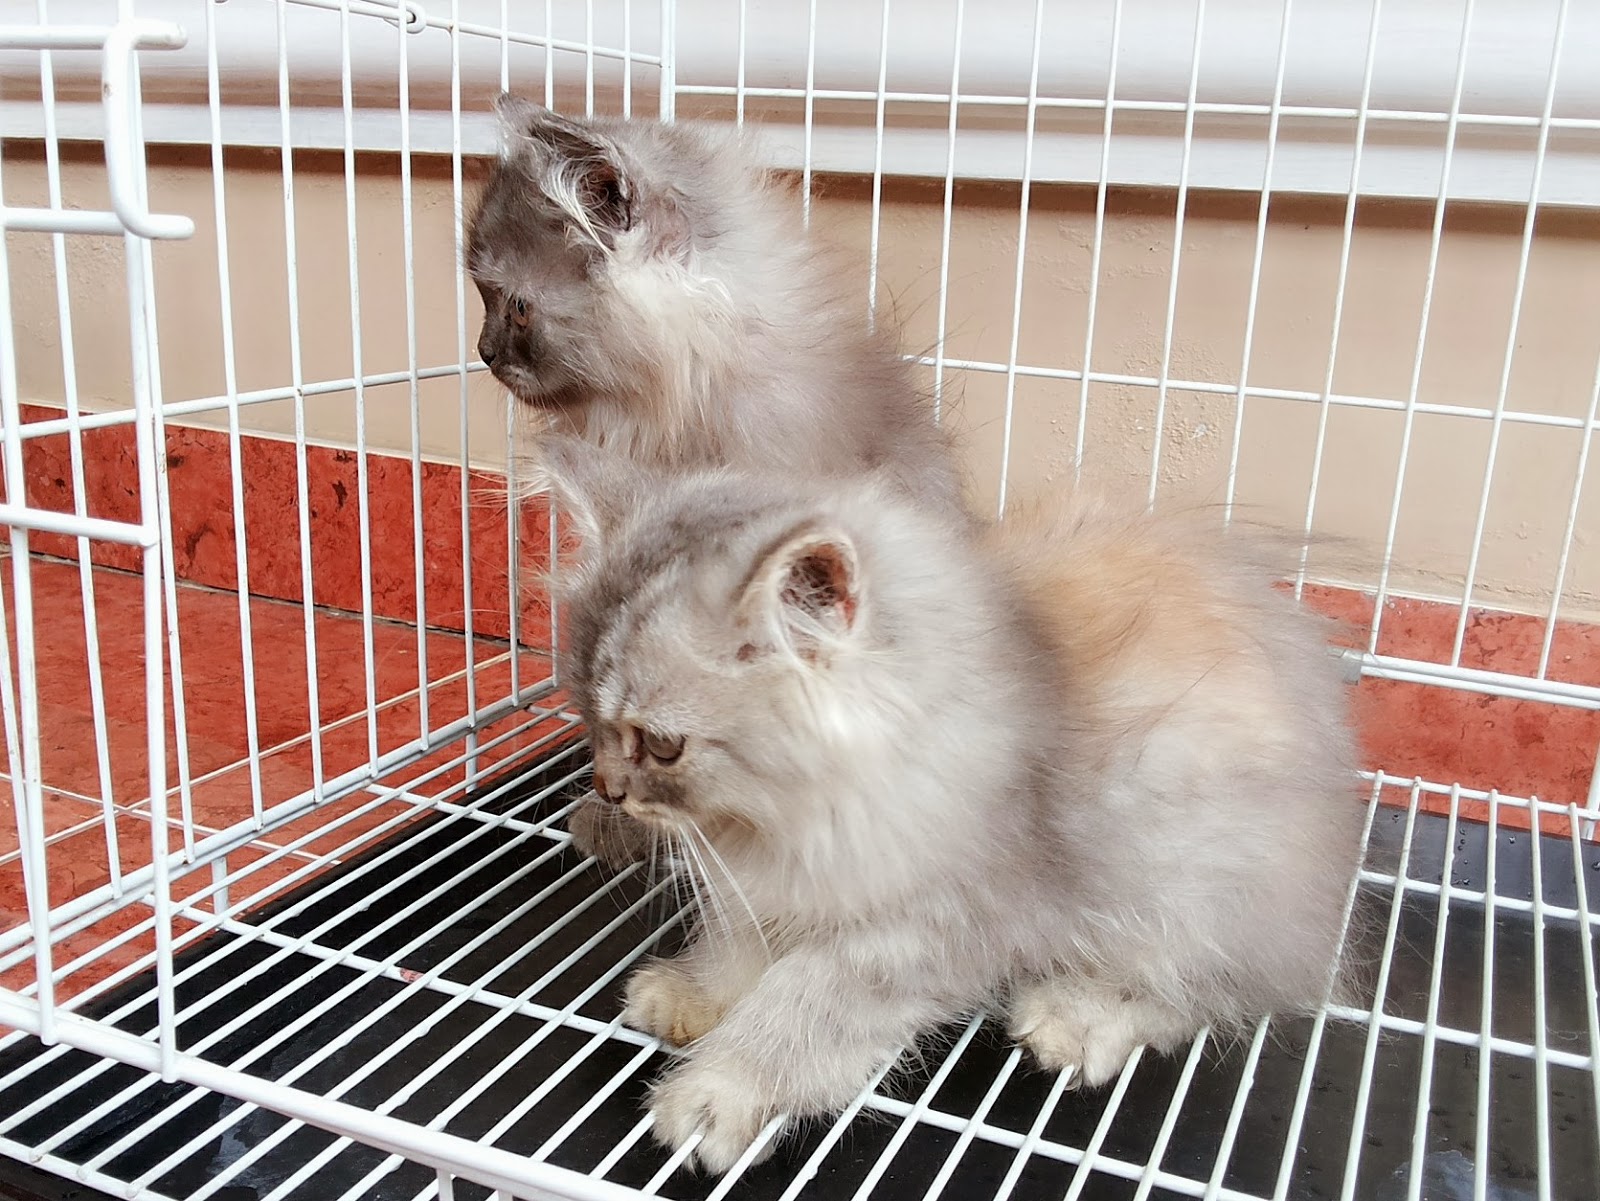 Jual Kucing Persia Medium Murah Gan Hamster Sugarglider Betta